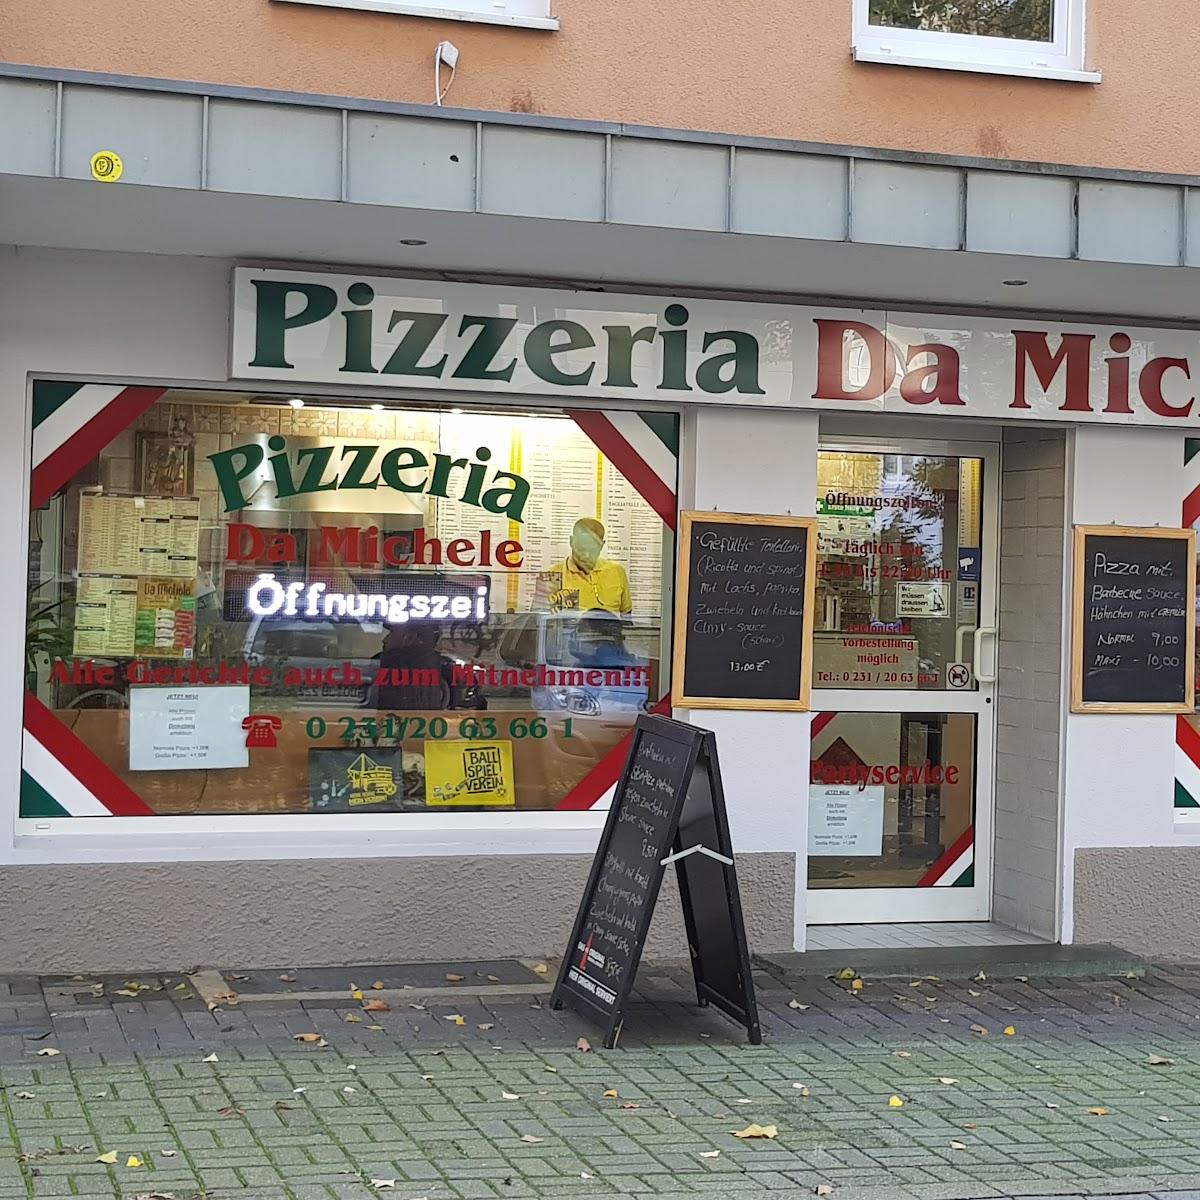 Restaurant "Pizzeria Da Michele" in Dortmund